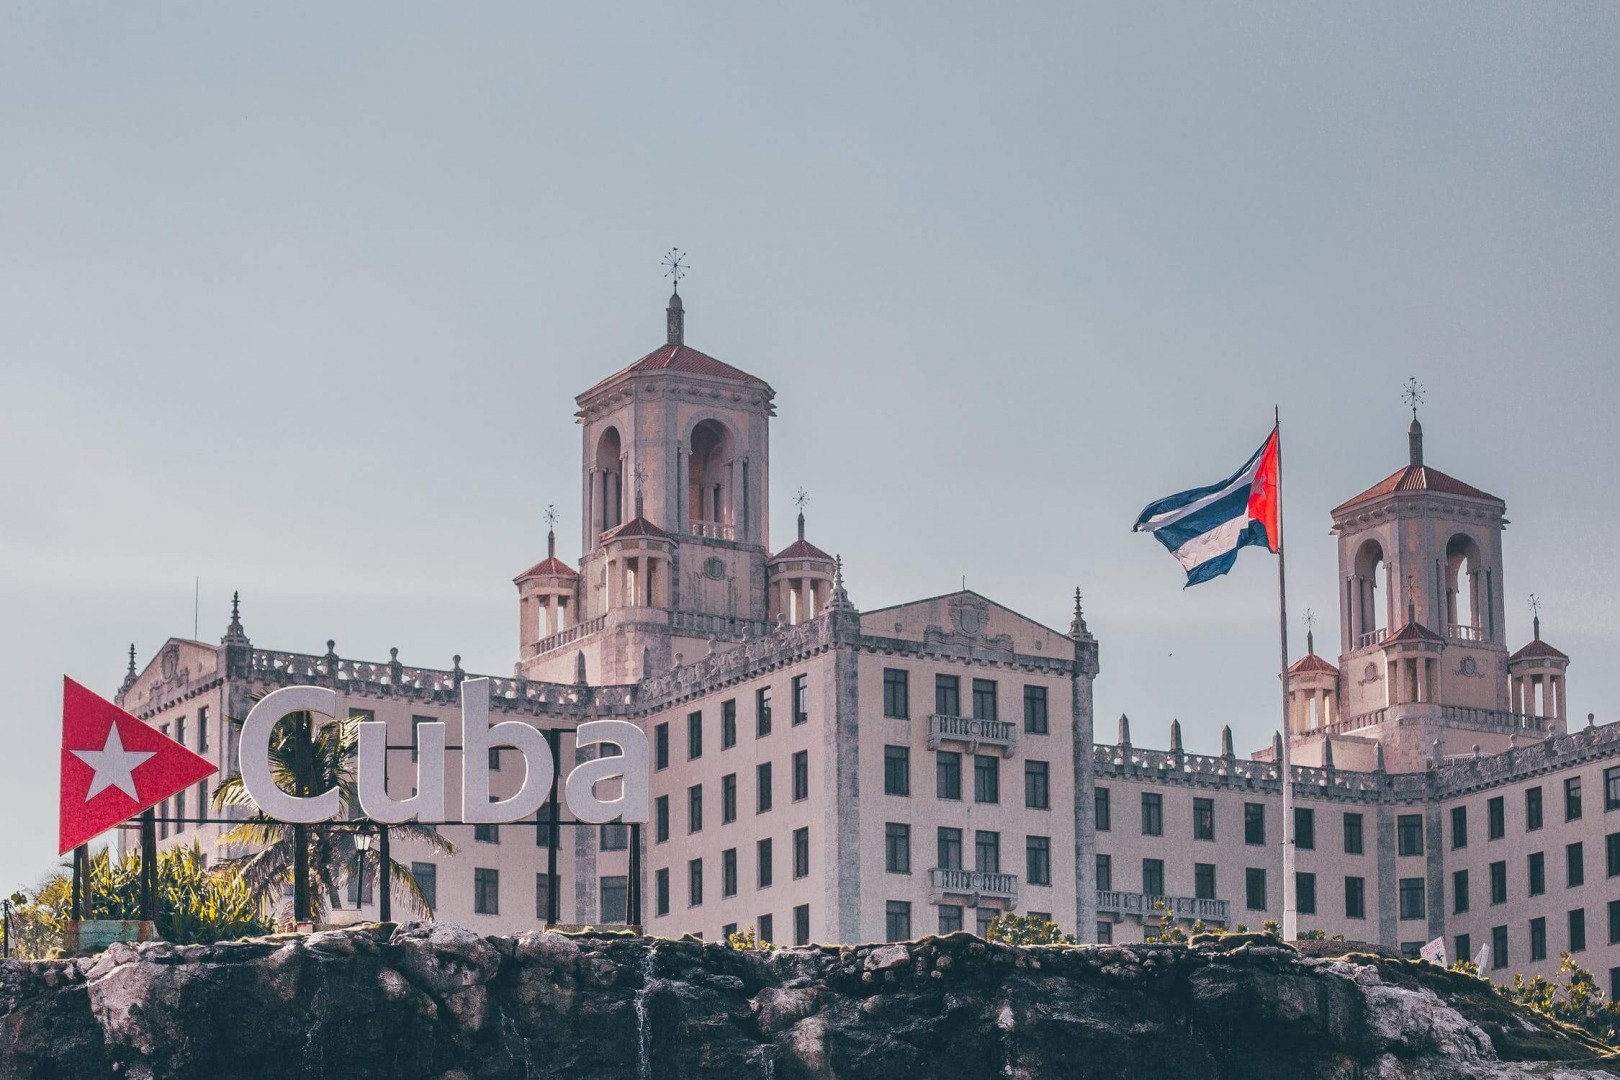 Cuba: The Dictatorship And The “Blockade” Lie